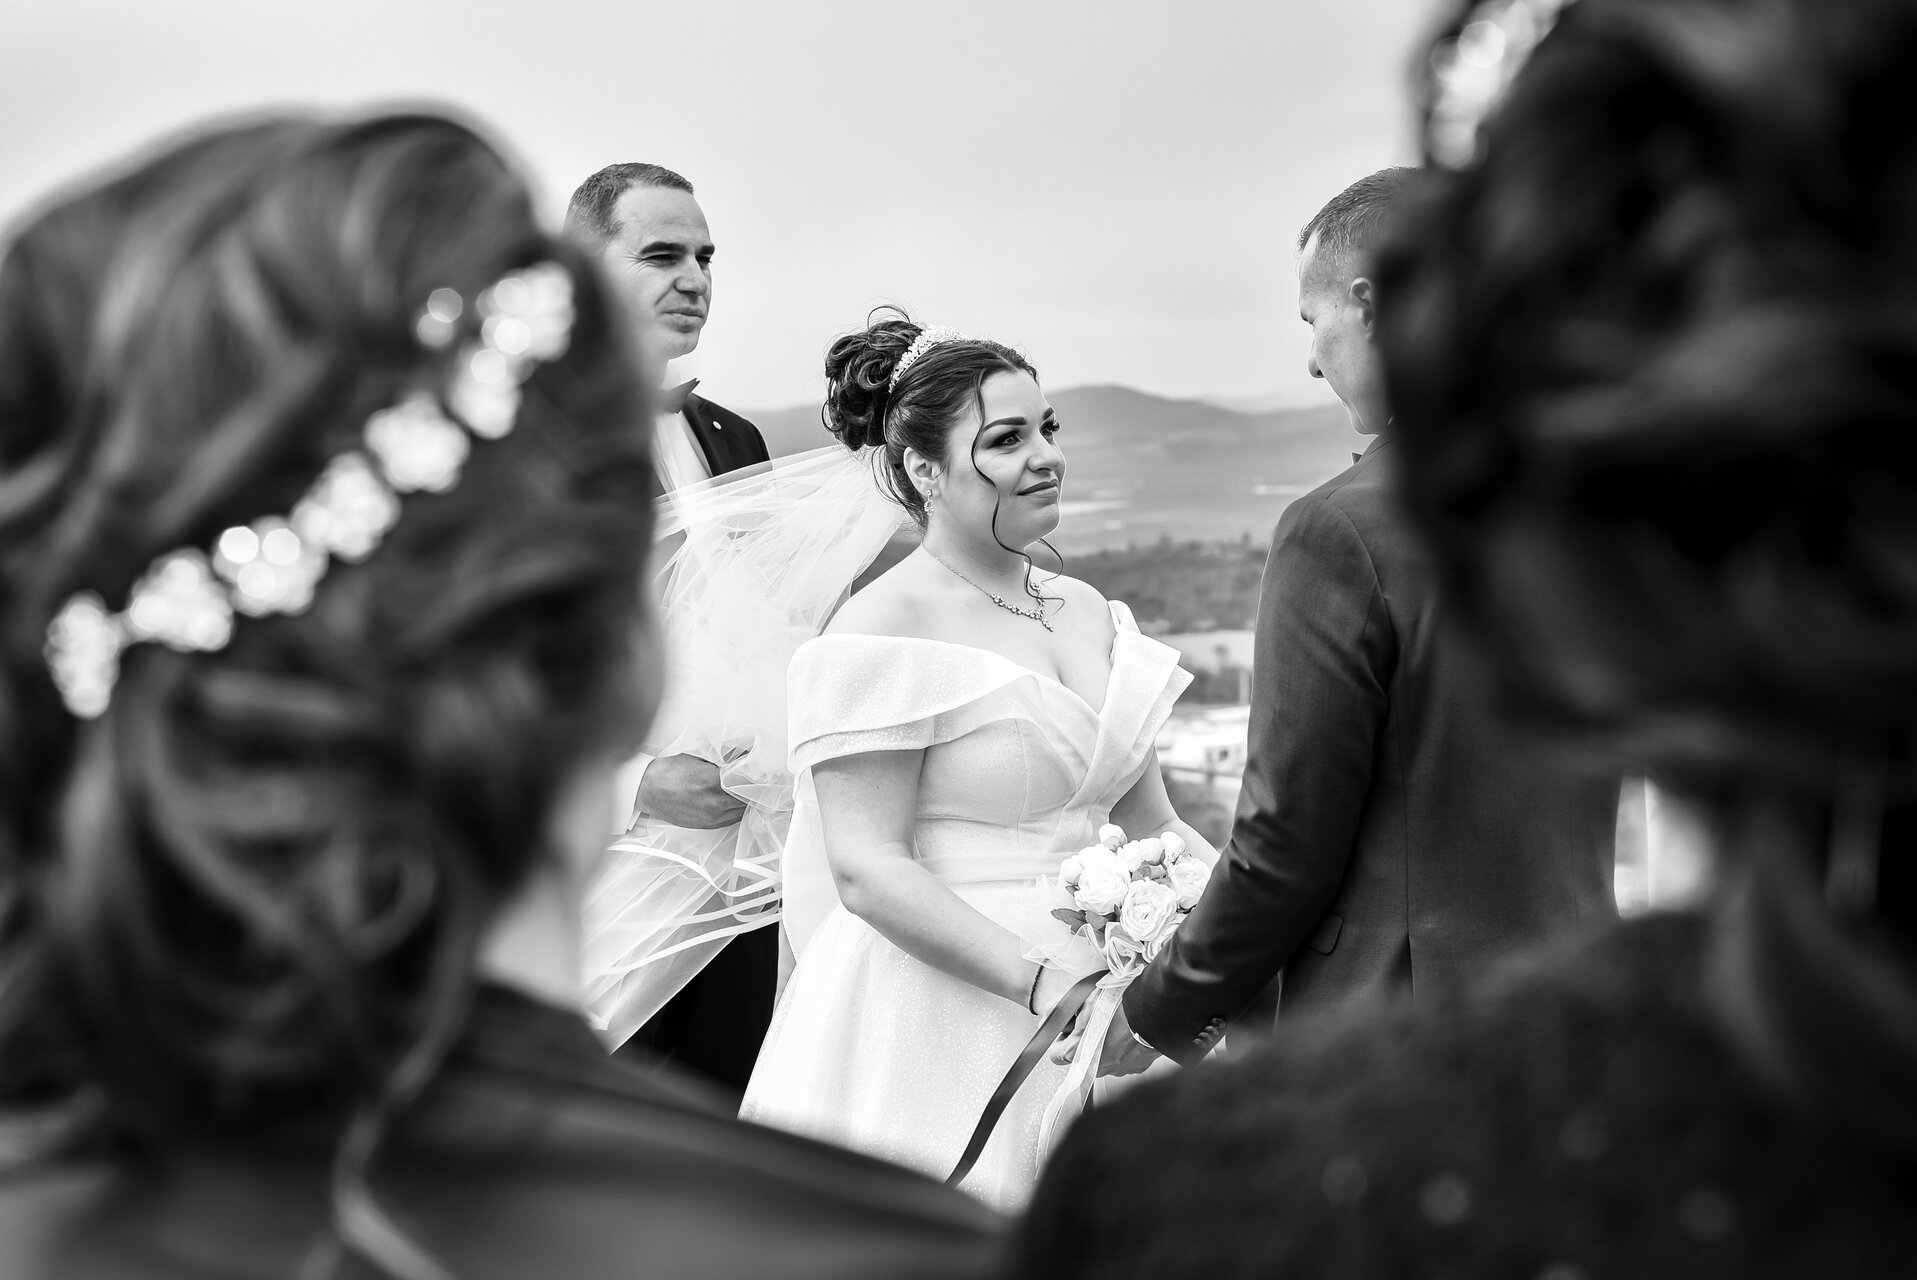 Photo in Wedding | Author Monika Ivanova - Monsi | PHOTO FORUM